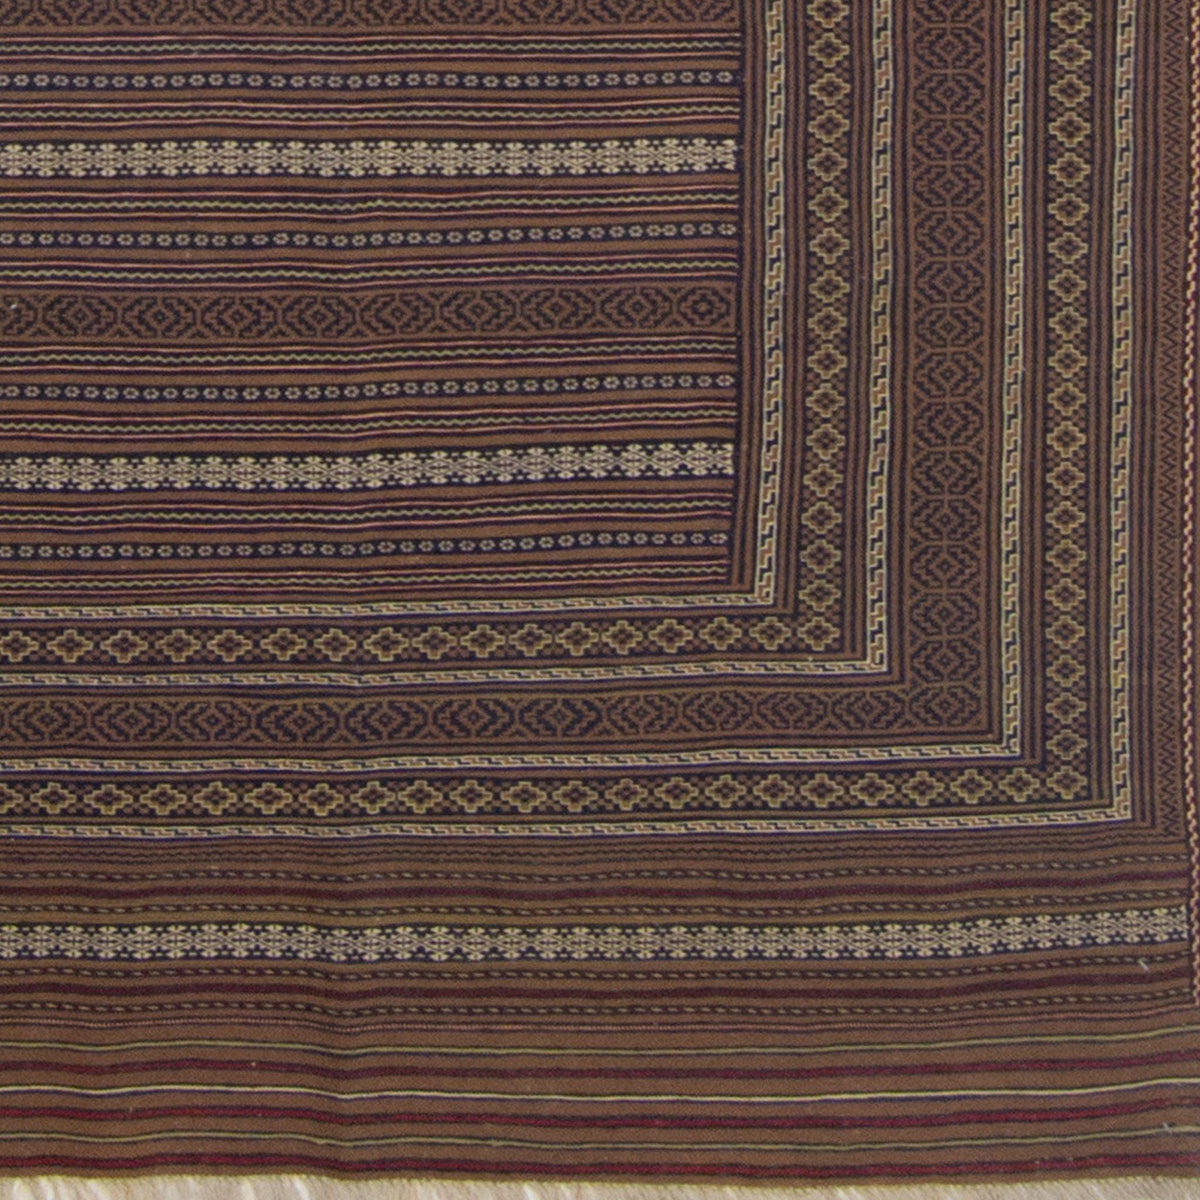 Persian Kilim Rug 141cm x 193cm